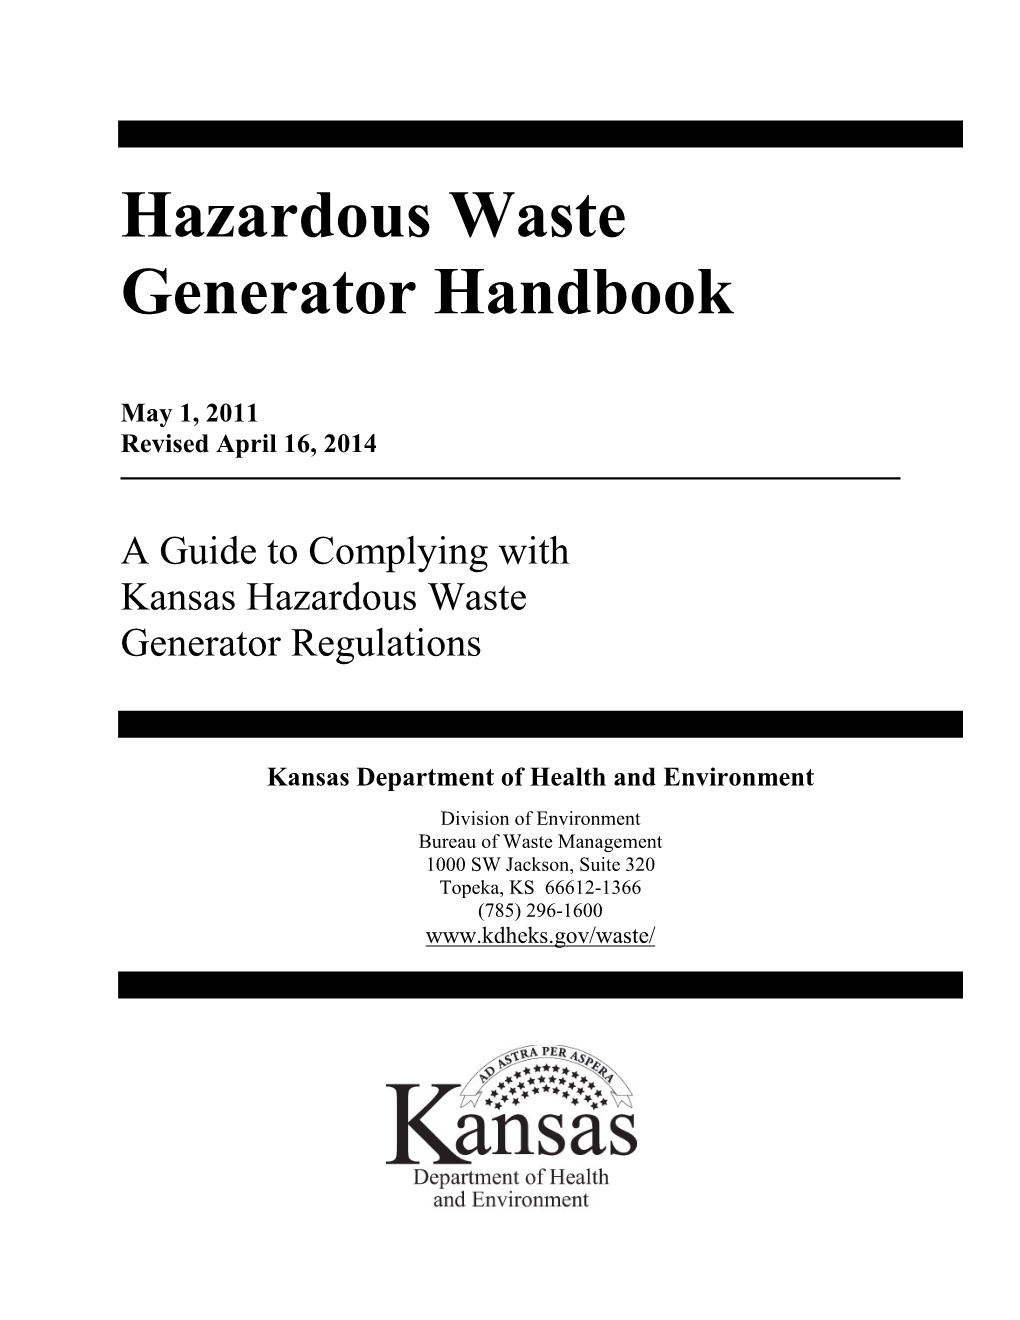 Hazardous Waste Generator Handbook